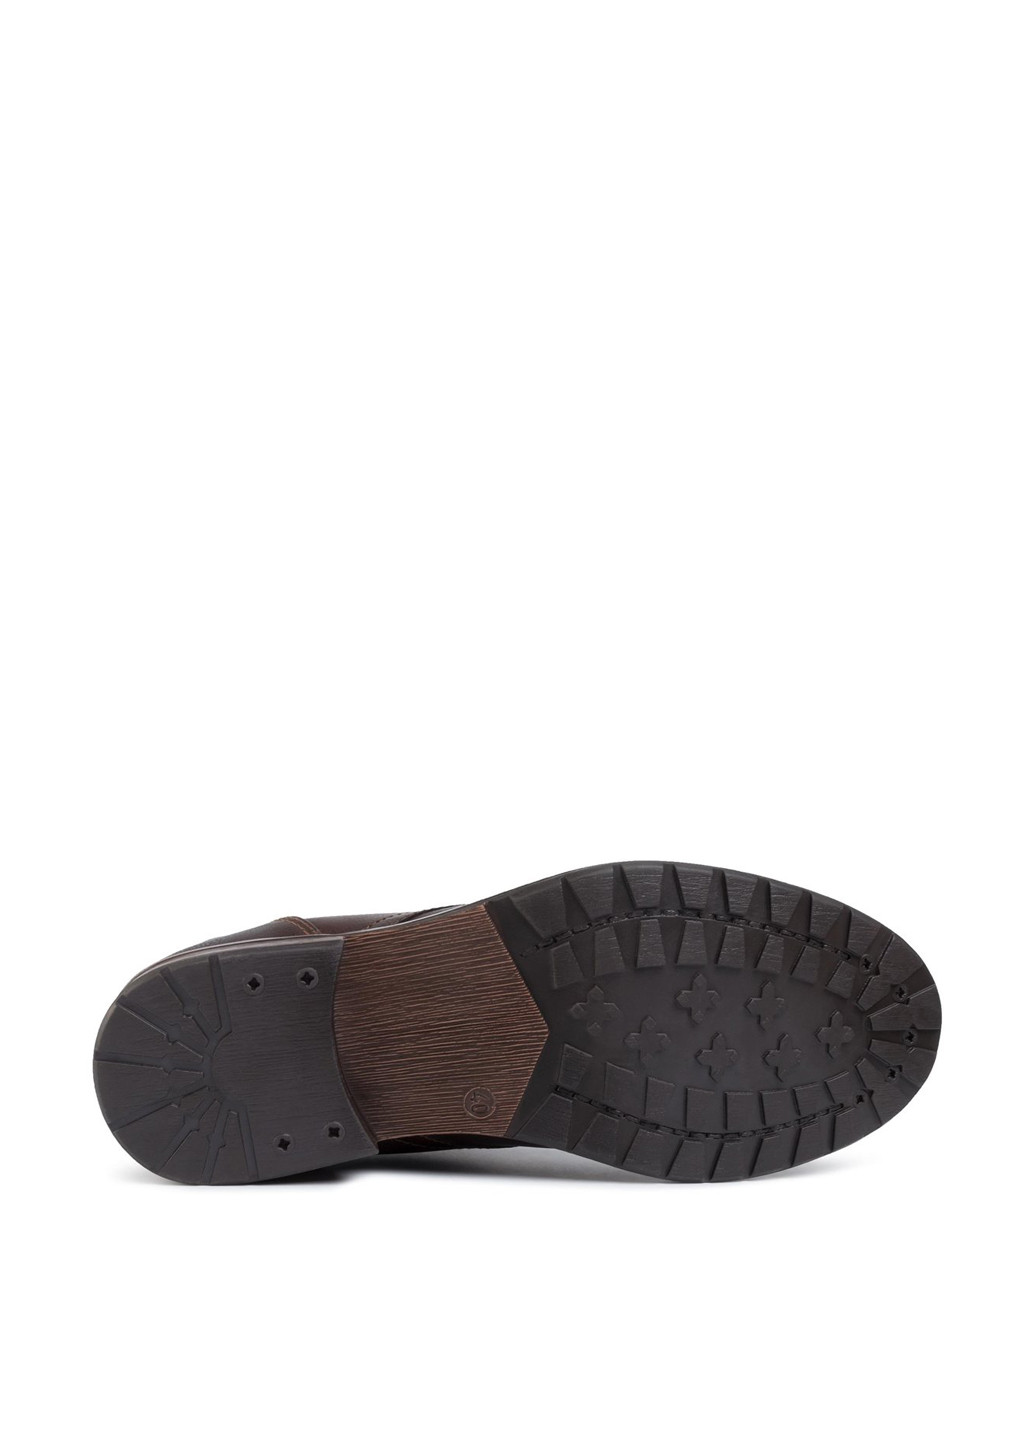 Темно-коричневые осенние черевики mbs-melos-01 Lanetti